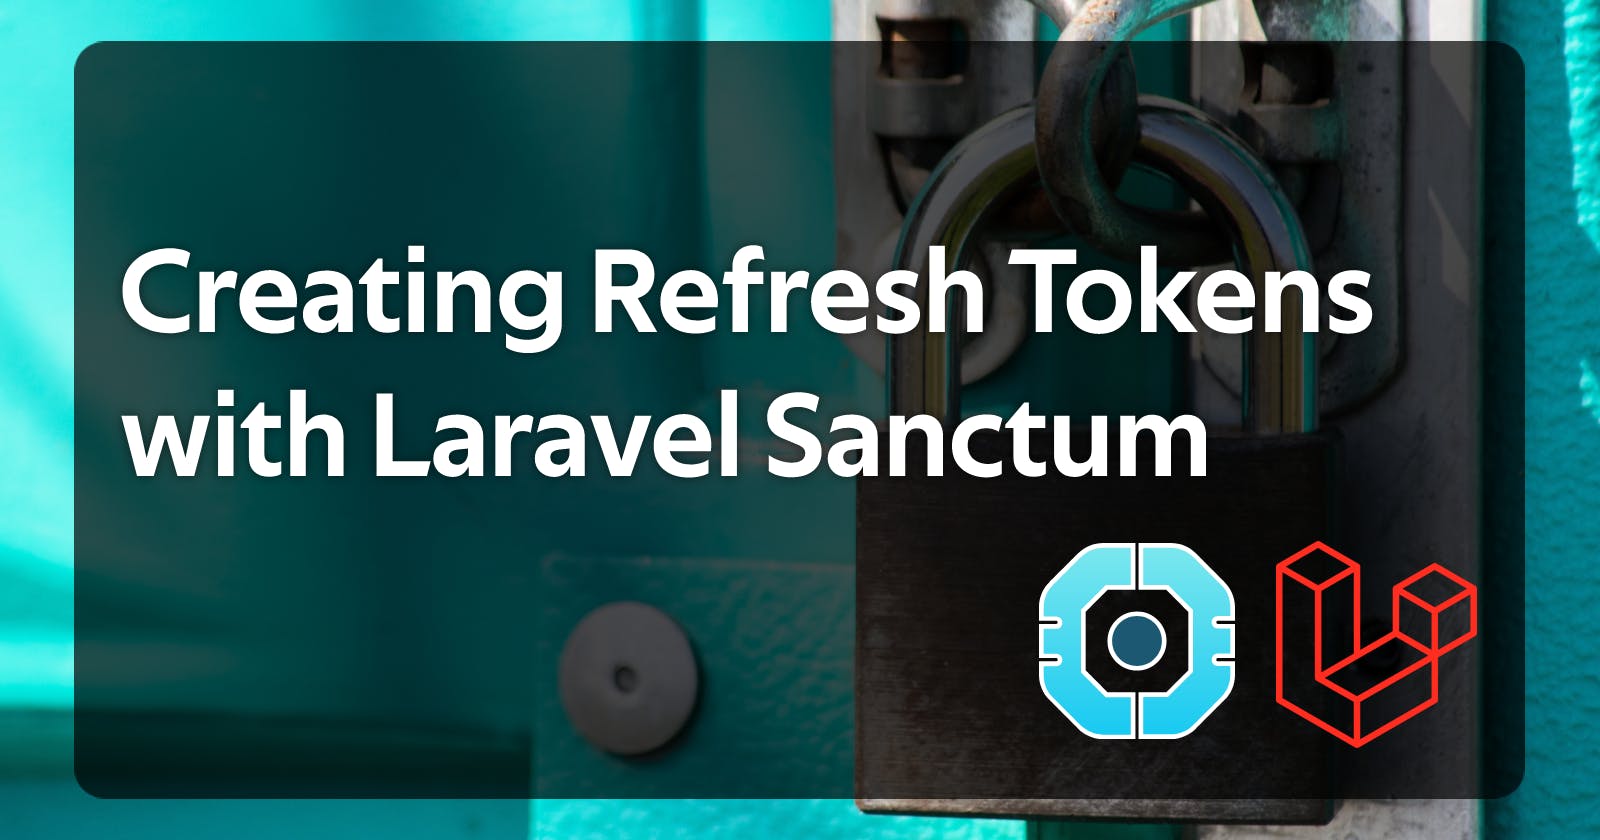 Creating Refresh Tokens with Laravel Sanctum